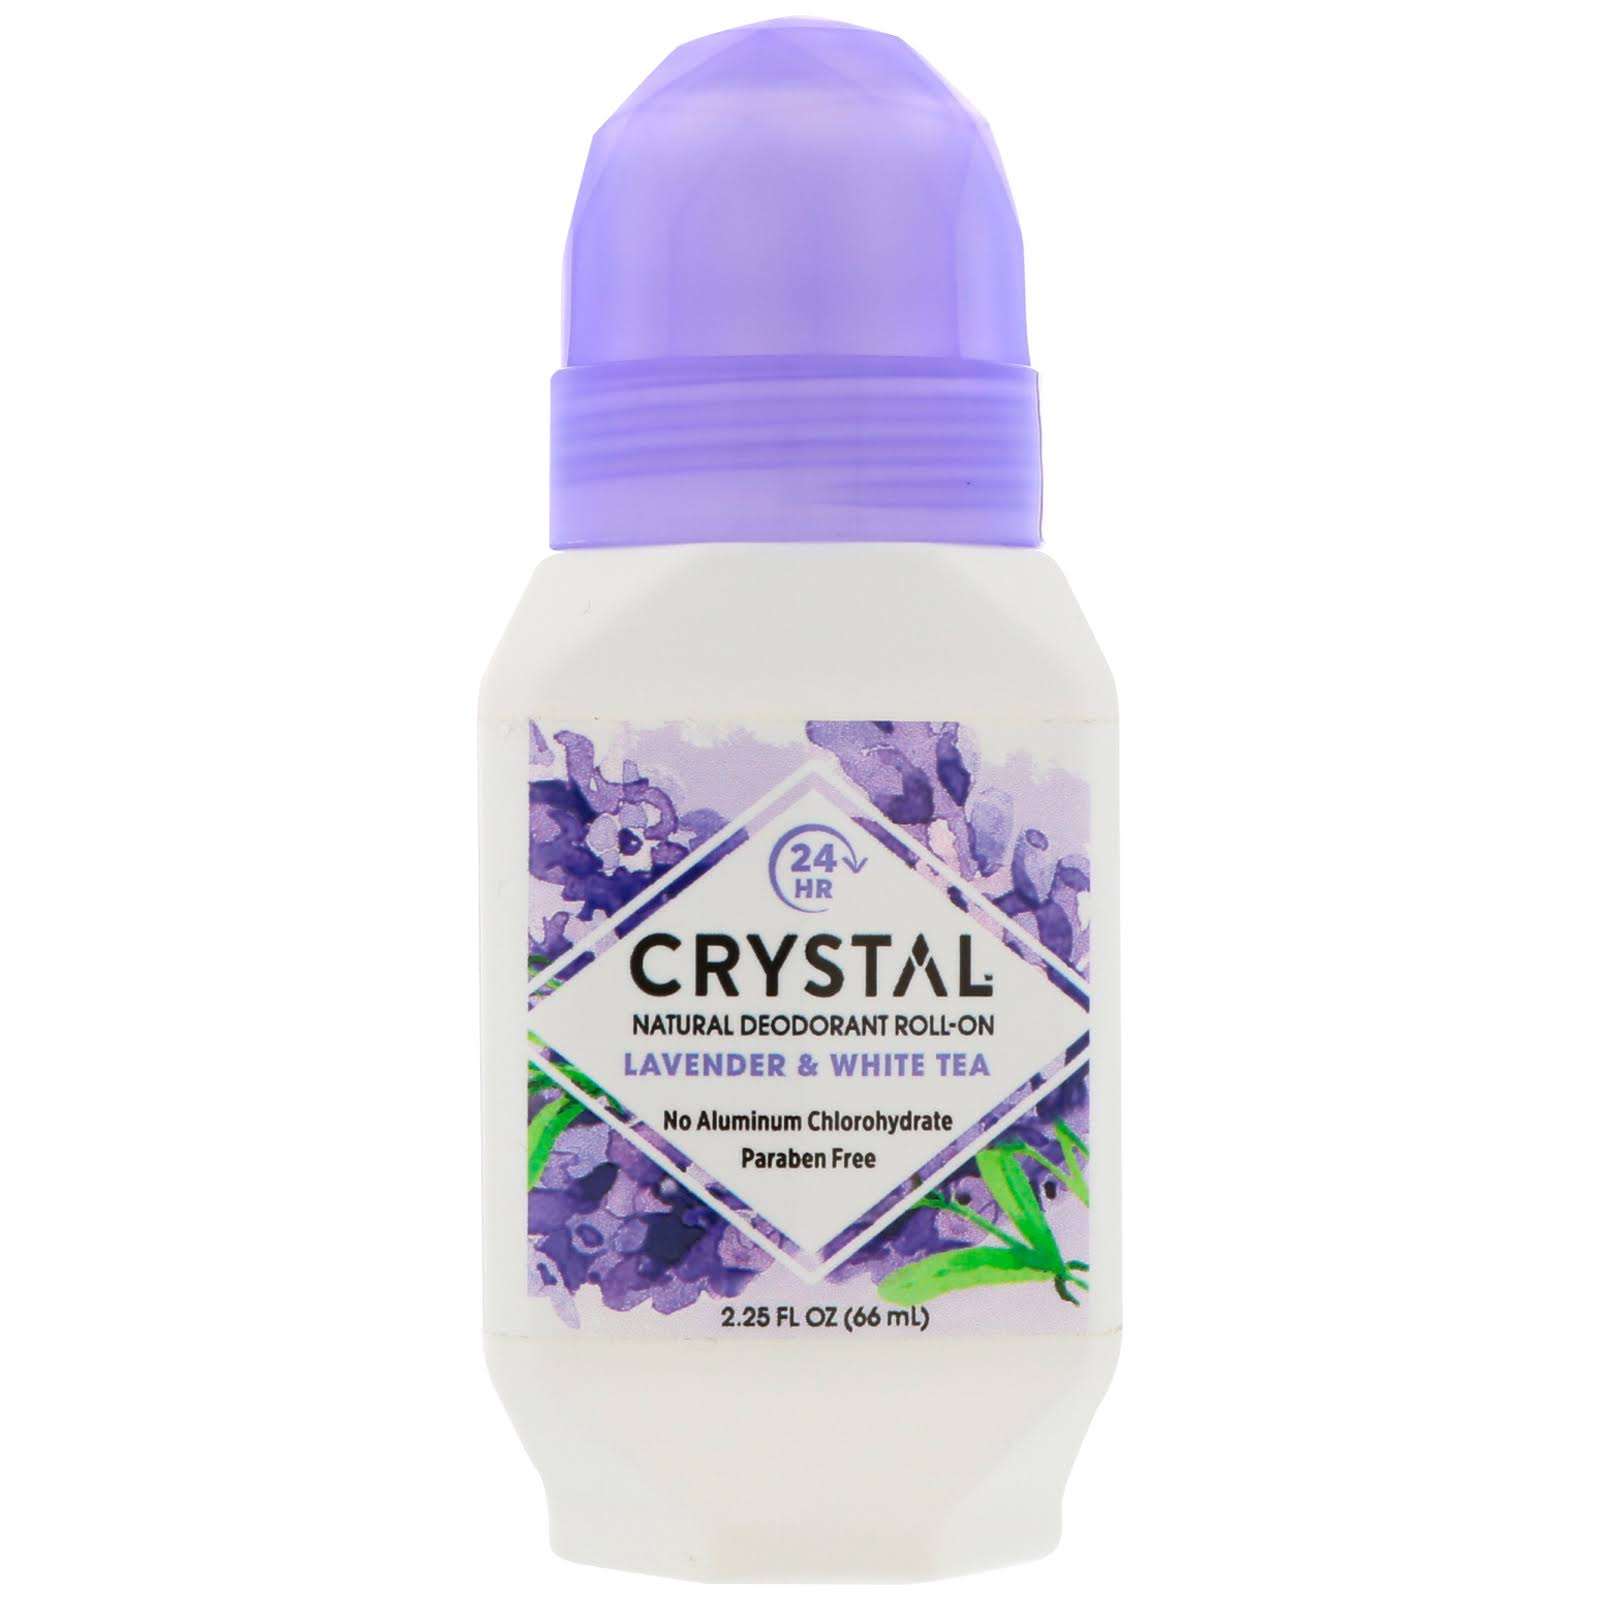 Crystal Body Deodorant Natural Deodorant - Lavender and White Tea, 2.5oz